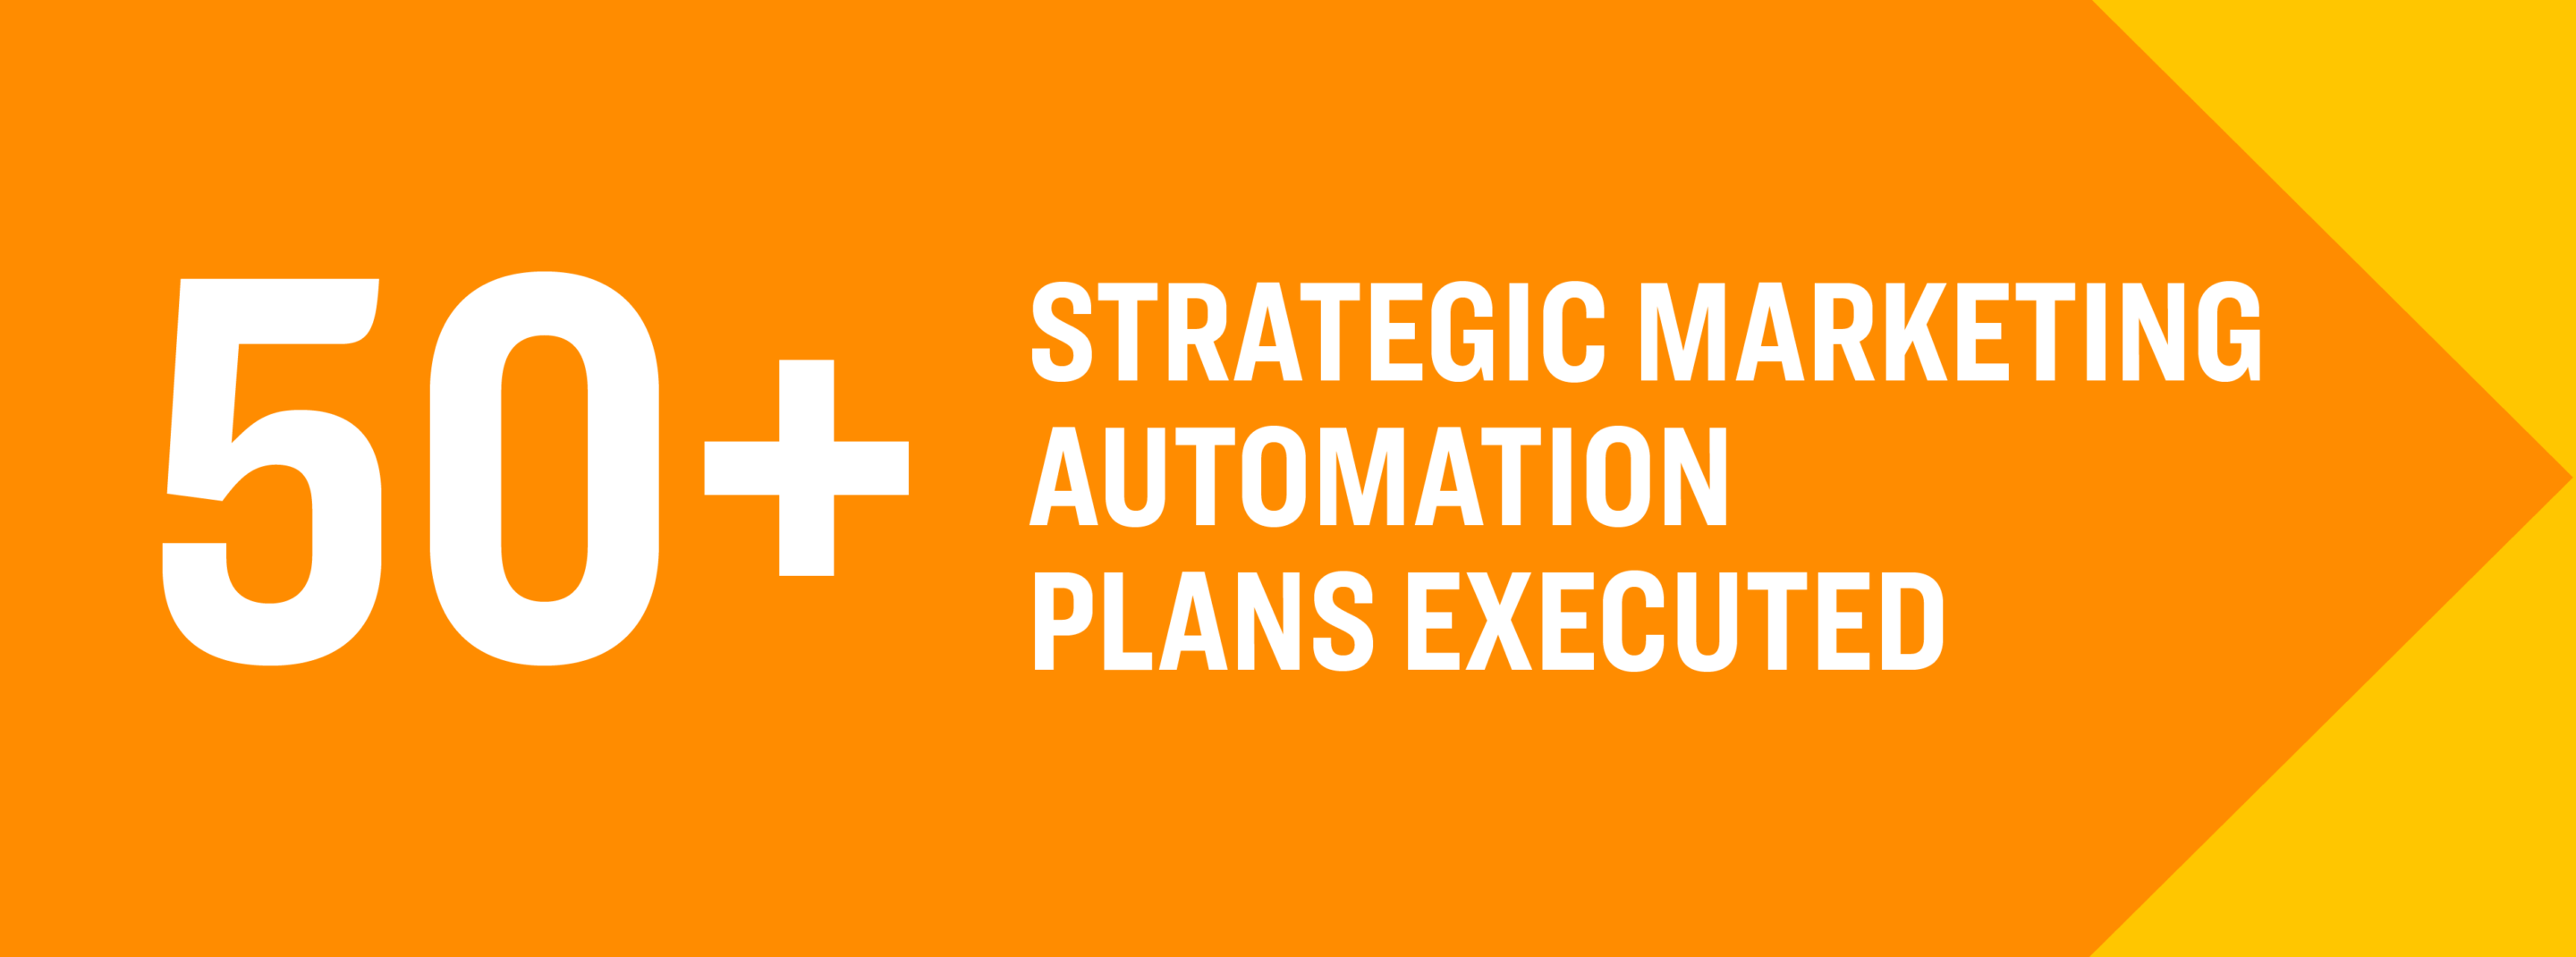 50 plus strategic marketing plans executed